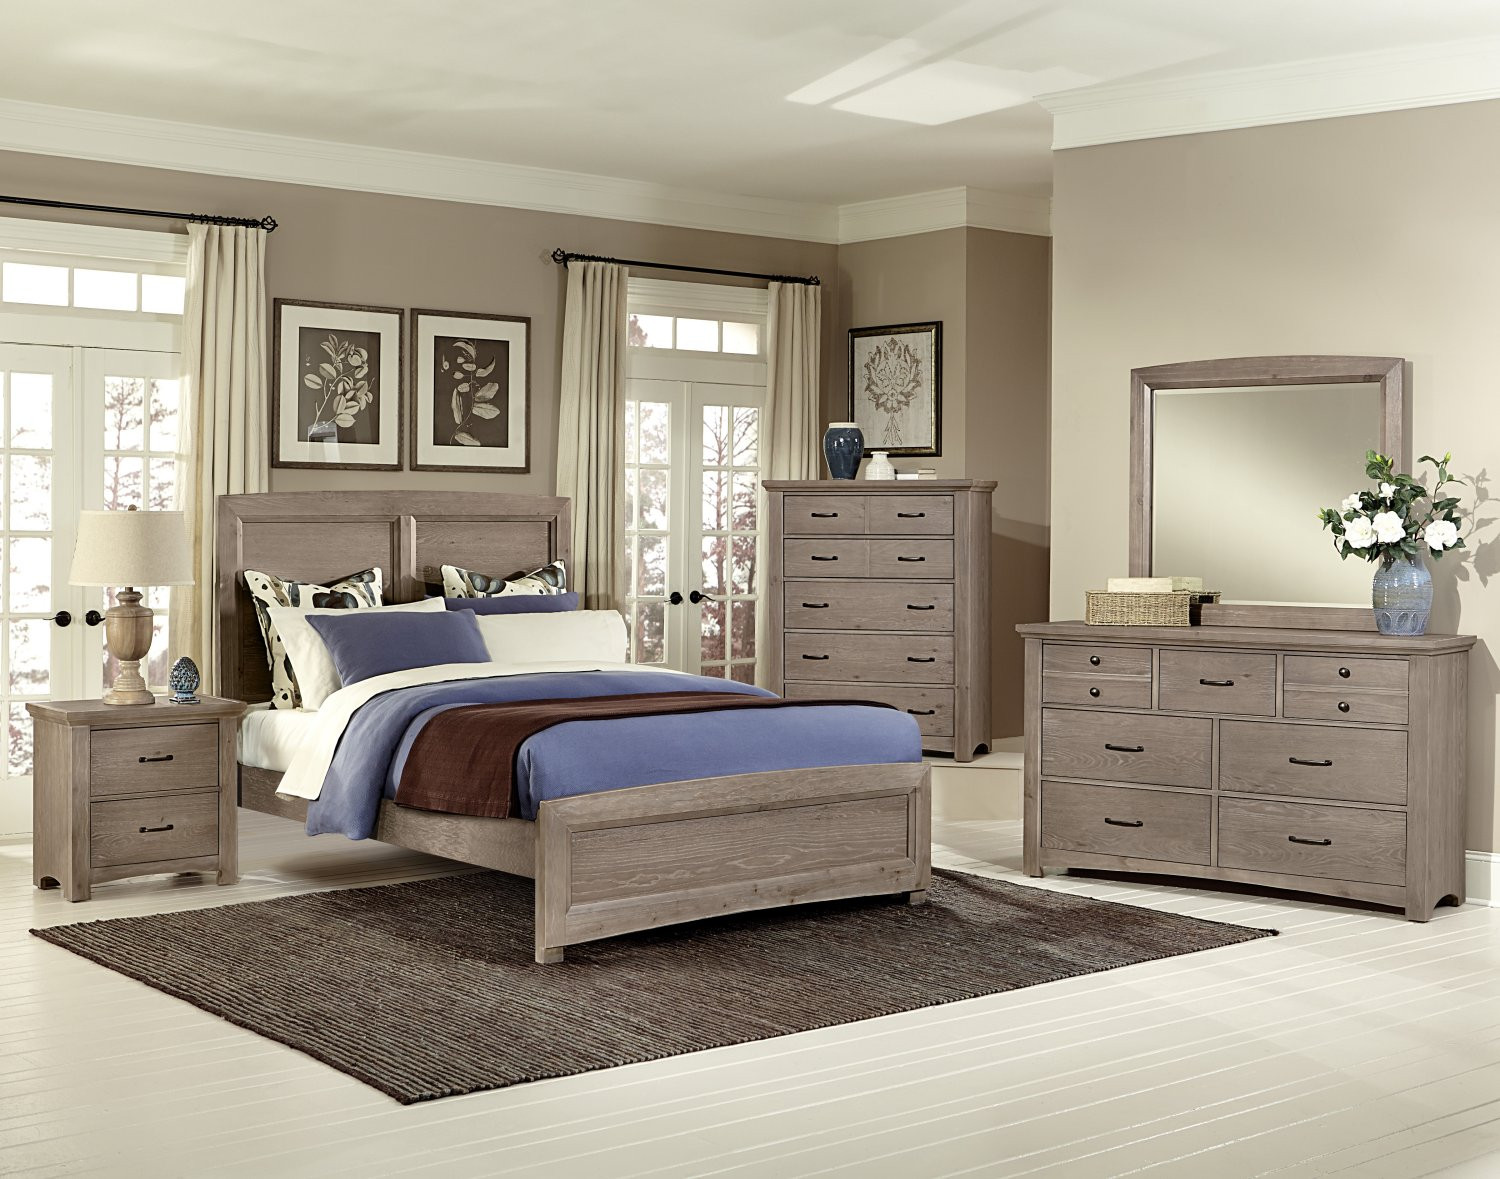 Best ideas about Bassett Bedroom Furniture
. Save or Pin Vaughan Bassett Transitions Driftwood Oak BB61 Bedroom Group Now.